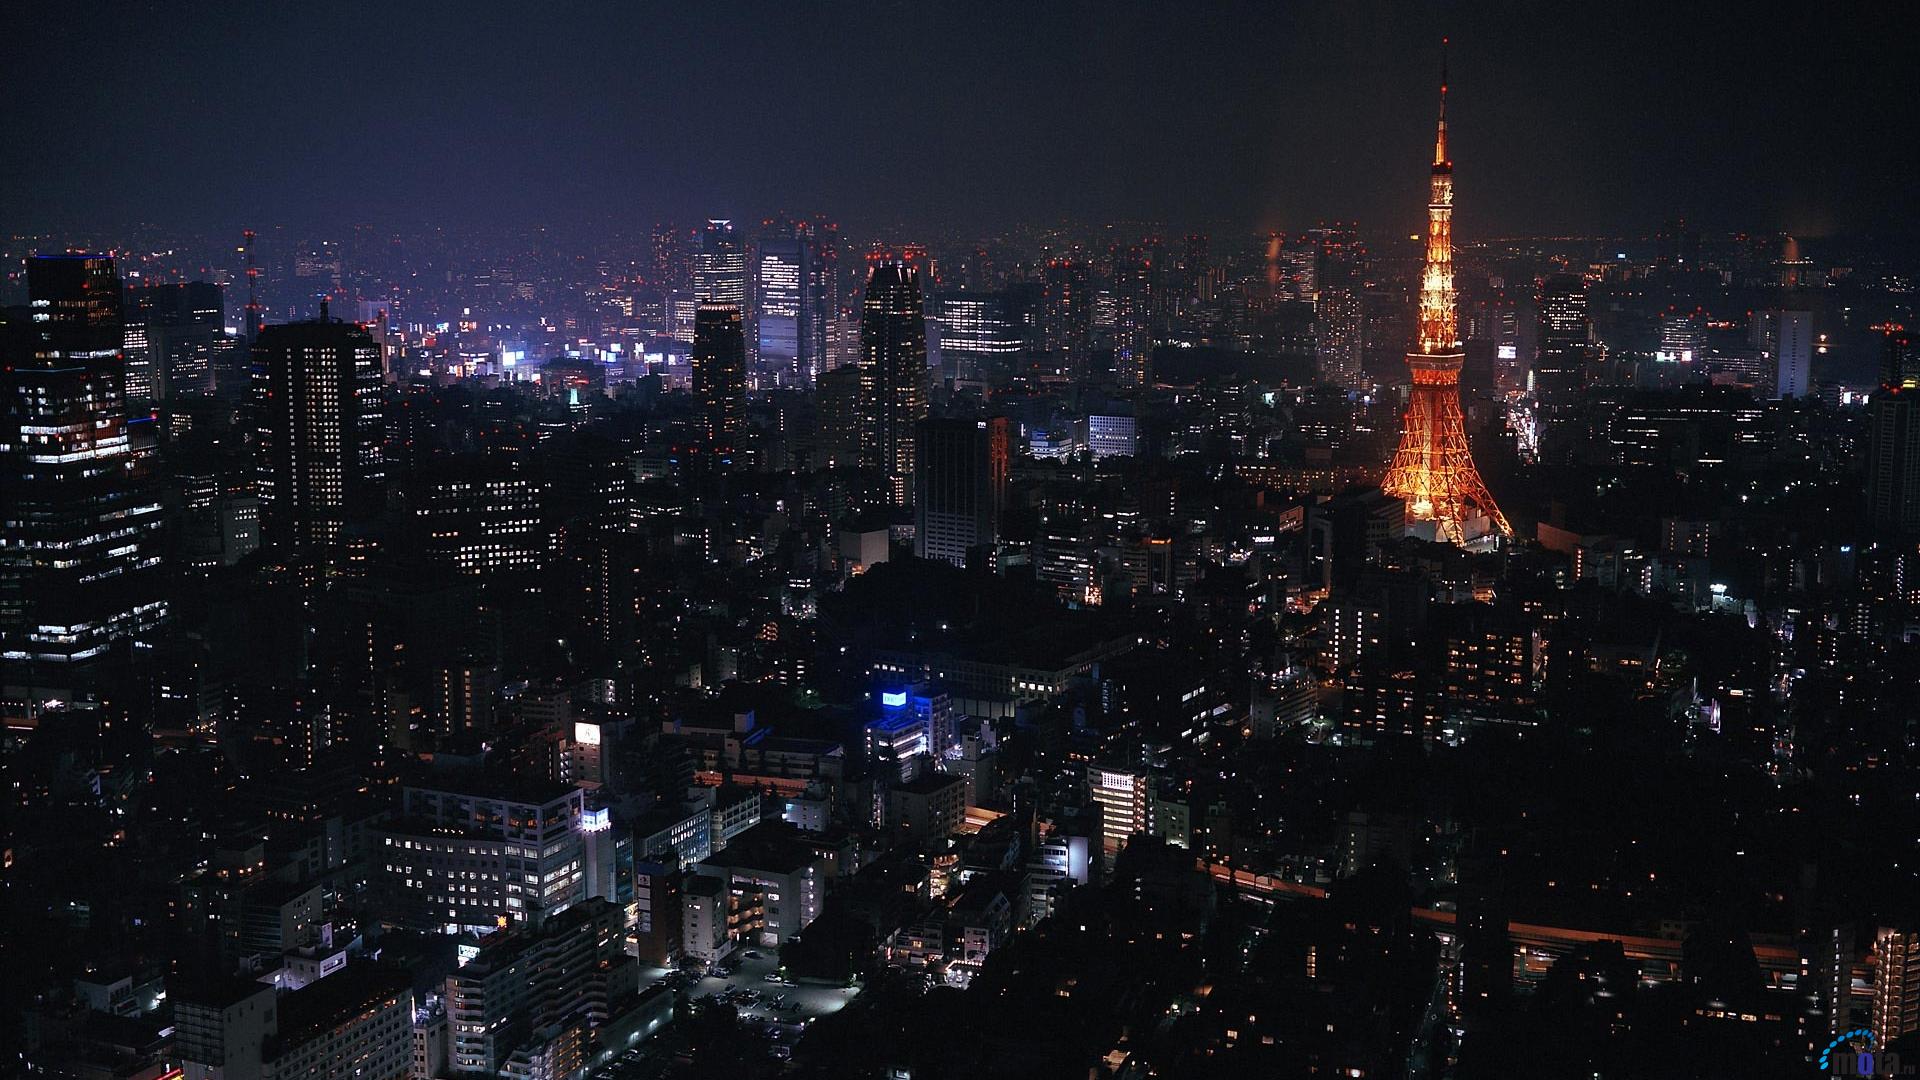 Download Wallpaper Tokyo Tower Japan 1920 x 1080 HDTV 1080p